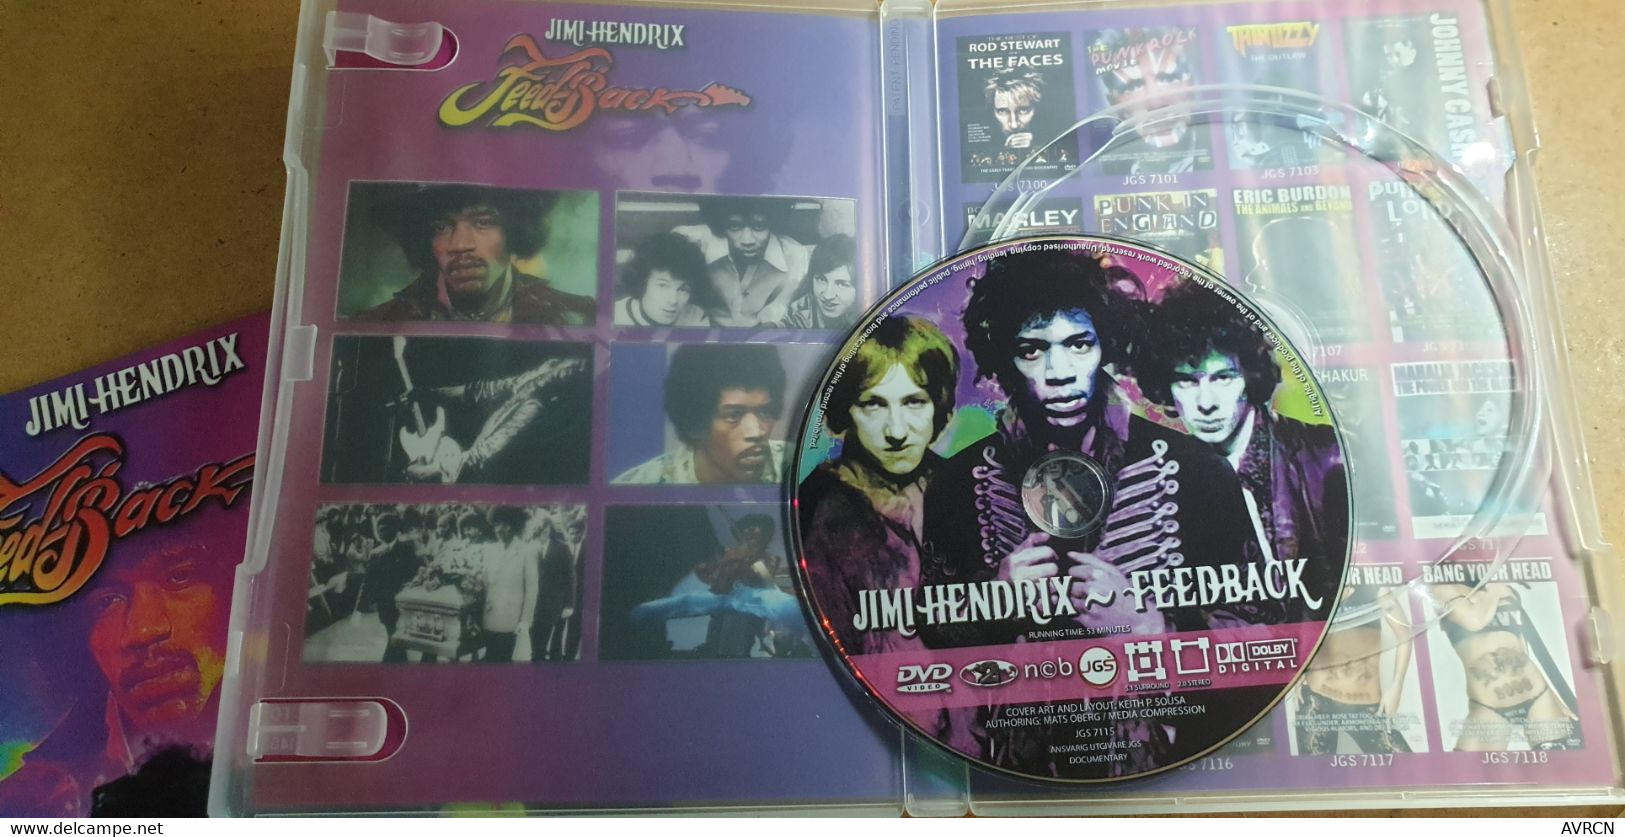 JIMI HENDRIX - FEEDBACK - DVD « NCB-JGS 7115 ». - DVD Musicales